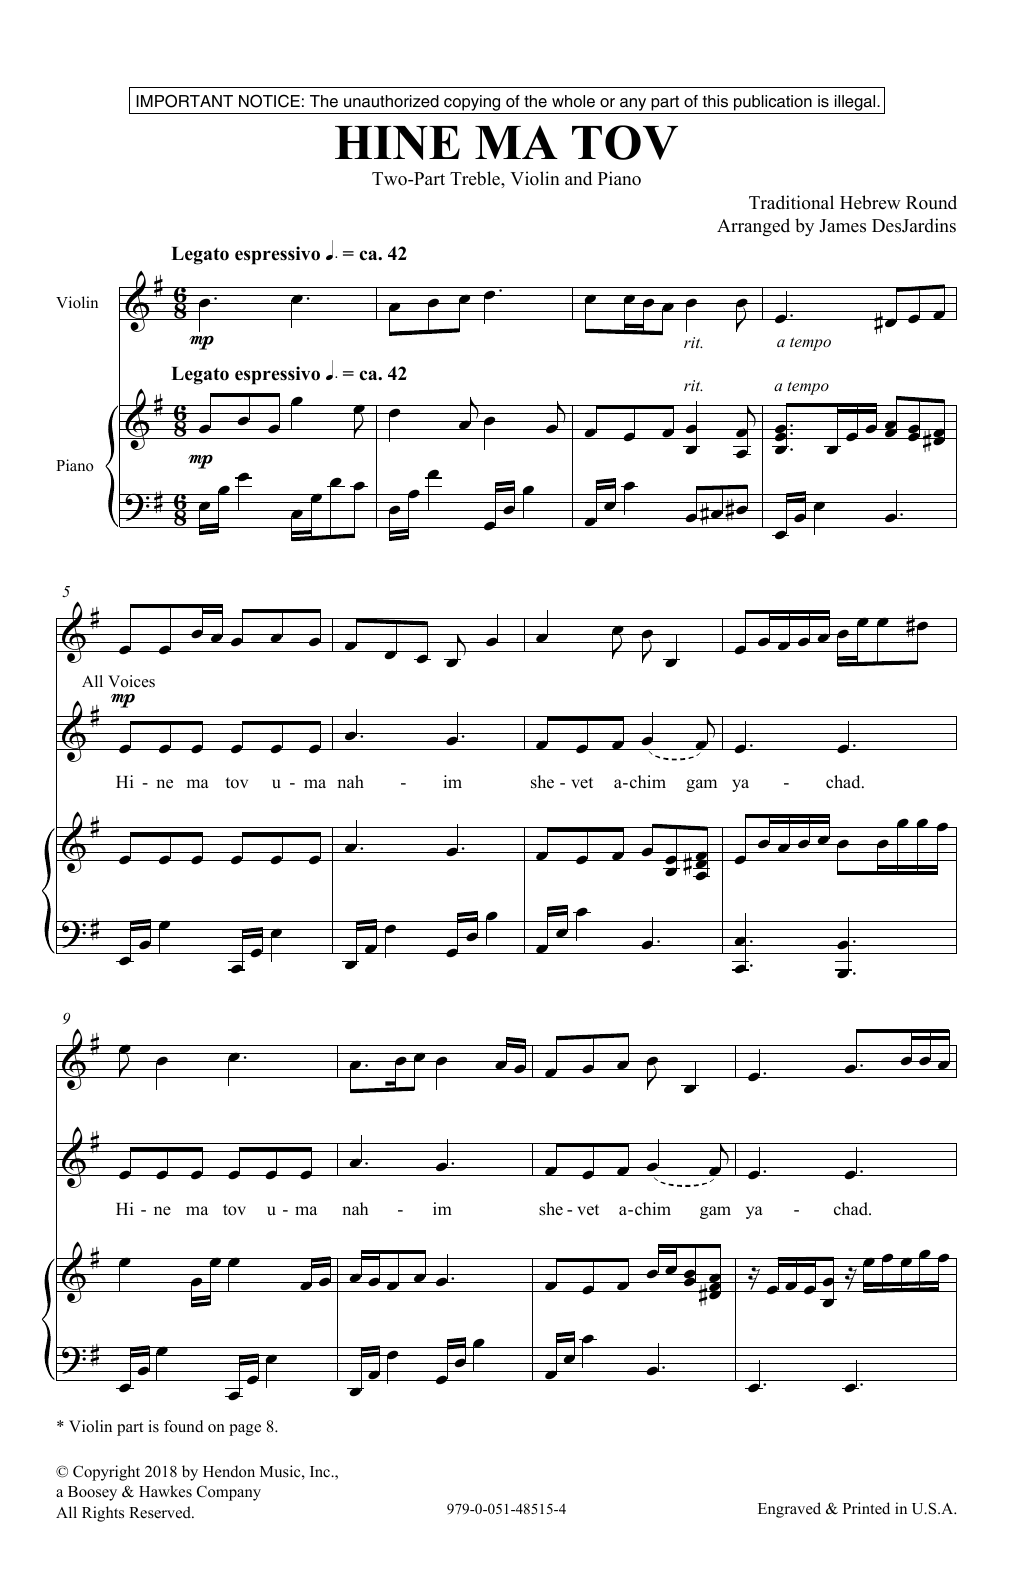 James DesJardins Hine Ma Tov Sheet Music Notes & Chords for 2-Part Choir - Download or Print PDF